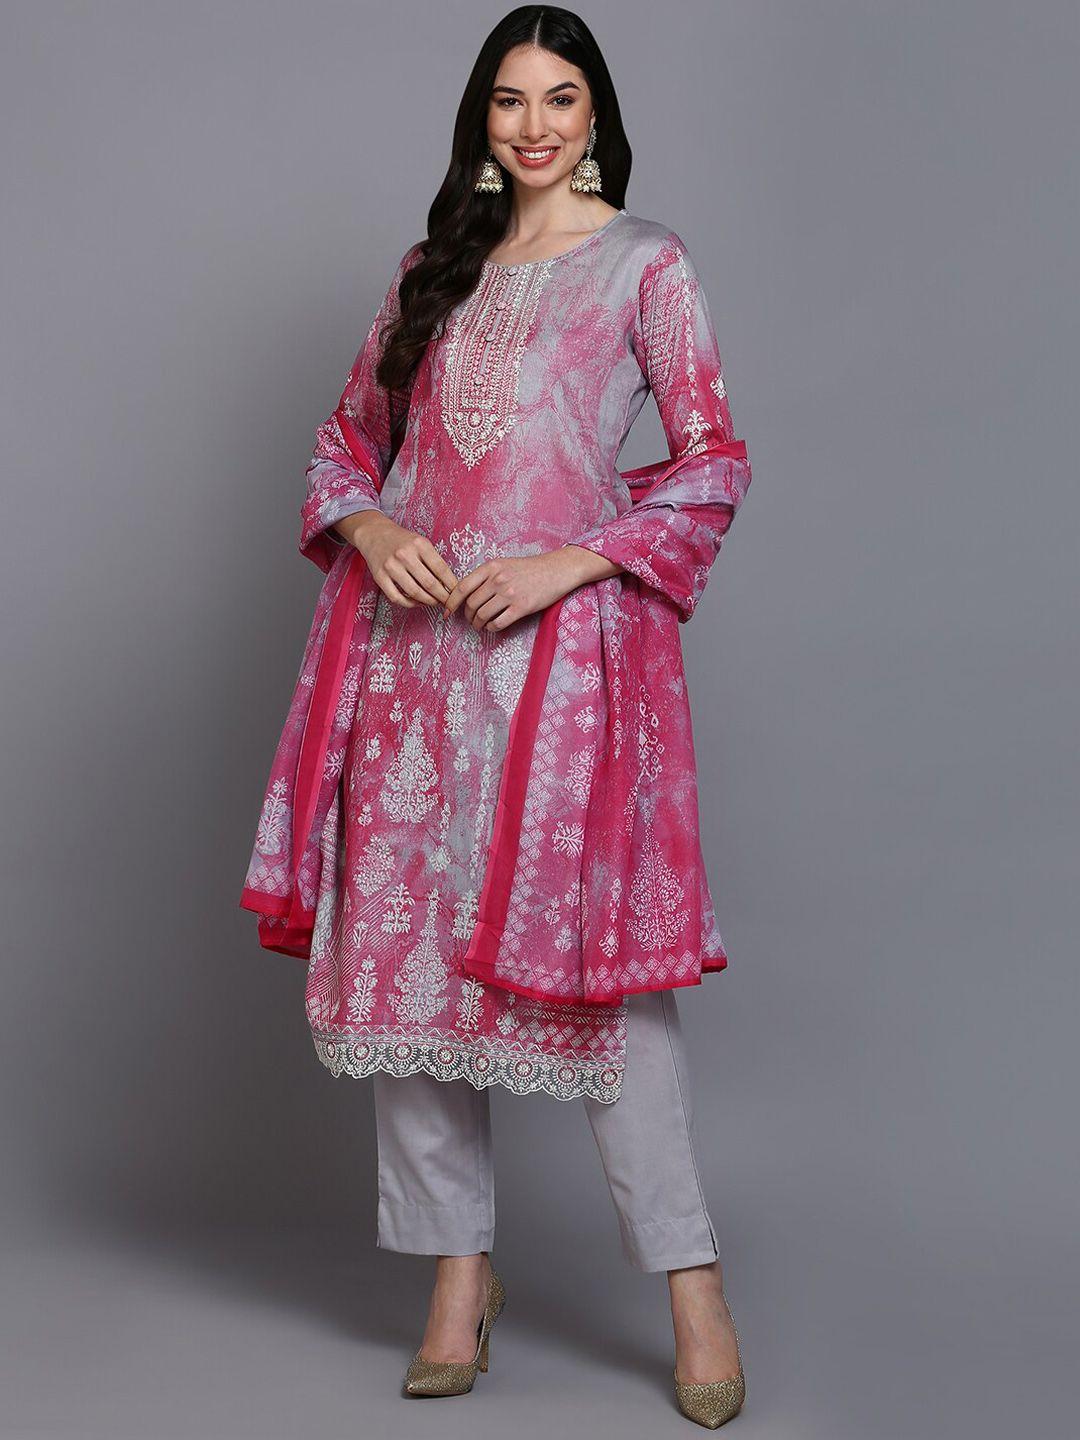 ahika grey & pink ethnic motifs printed pure cotton kurta & trousers with dupatta